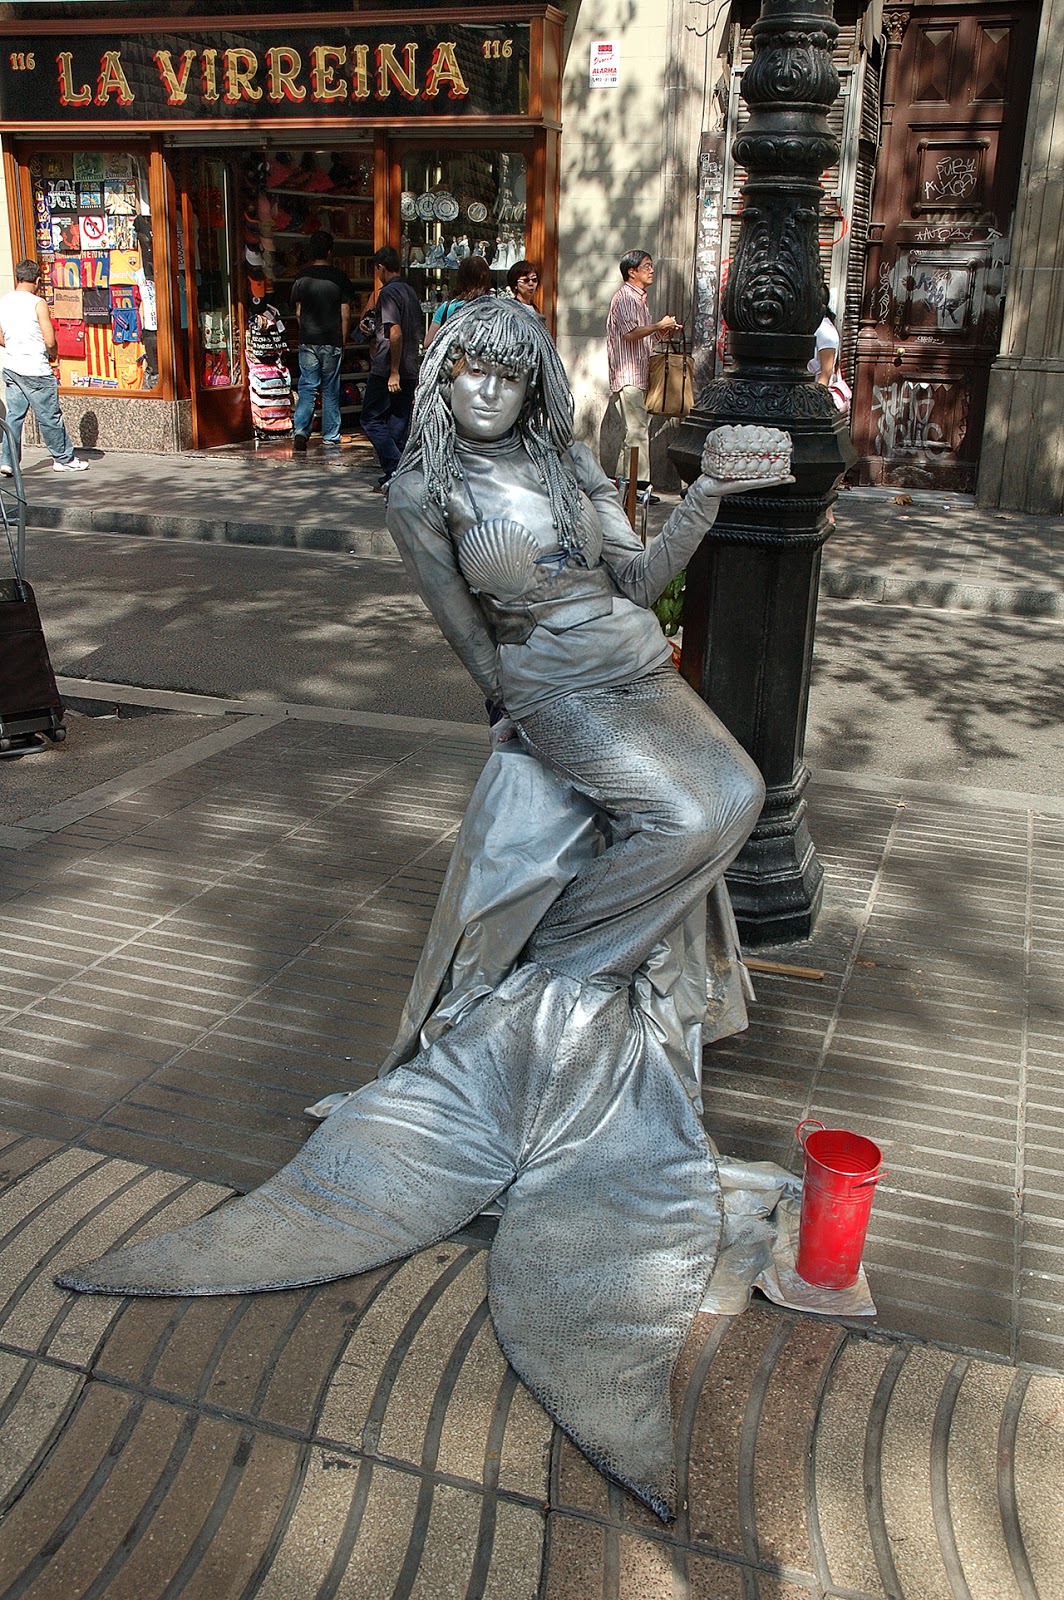 Barcelona's Las Ramblas street artists: Musing mermaid